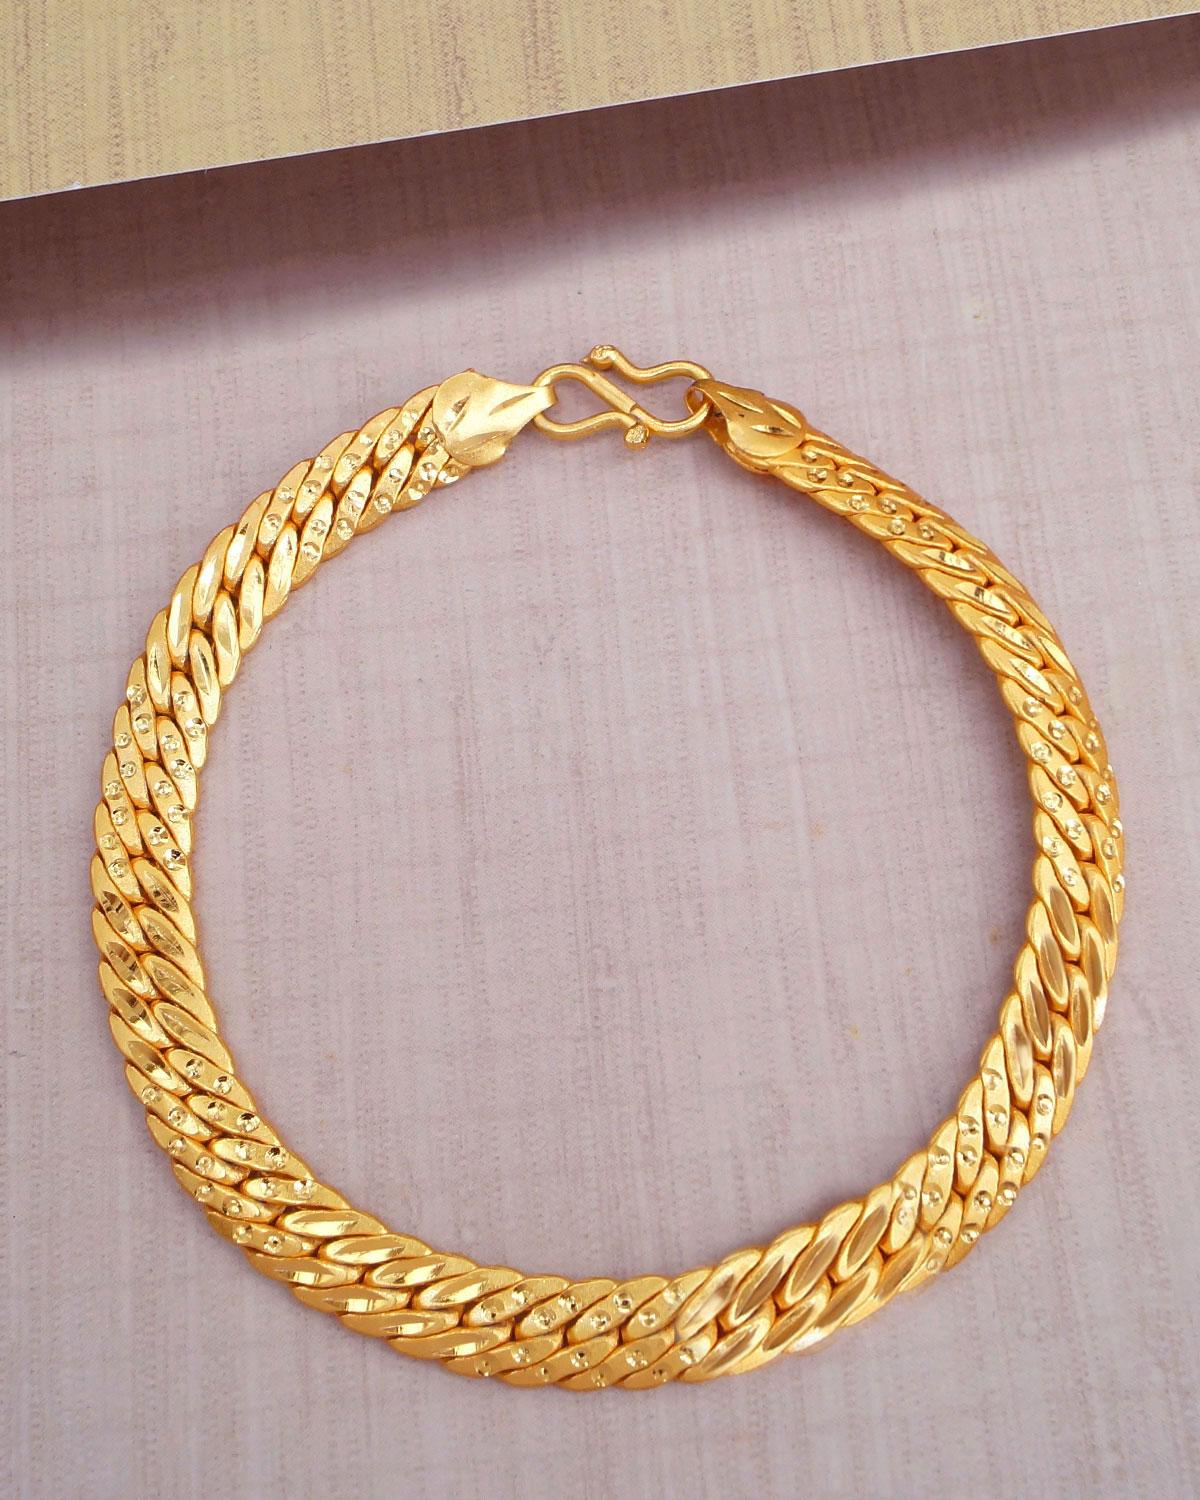 2 Gram Gold Premium Men's Bracelet Imitation Jewelry